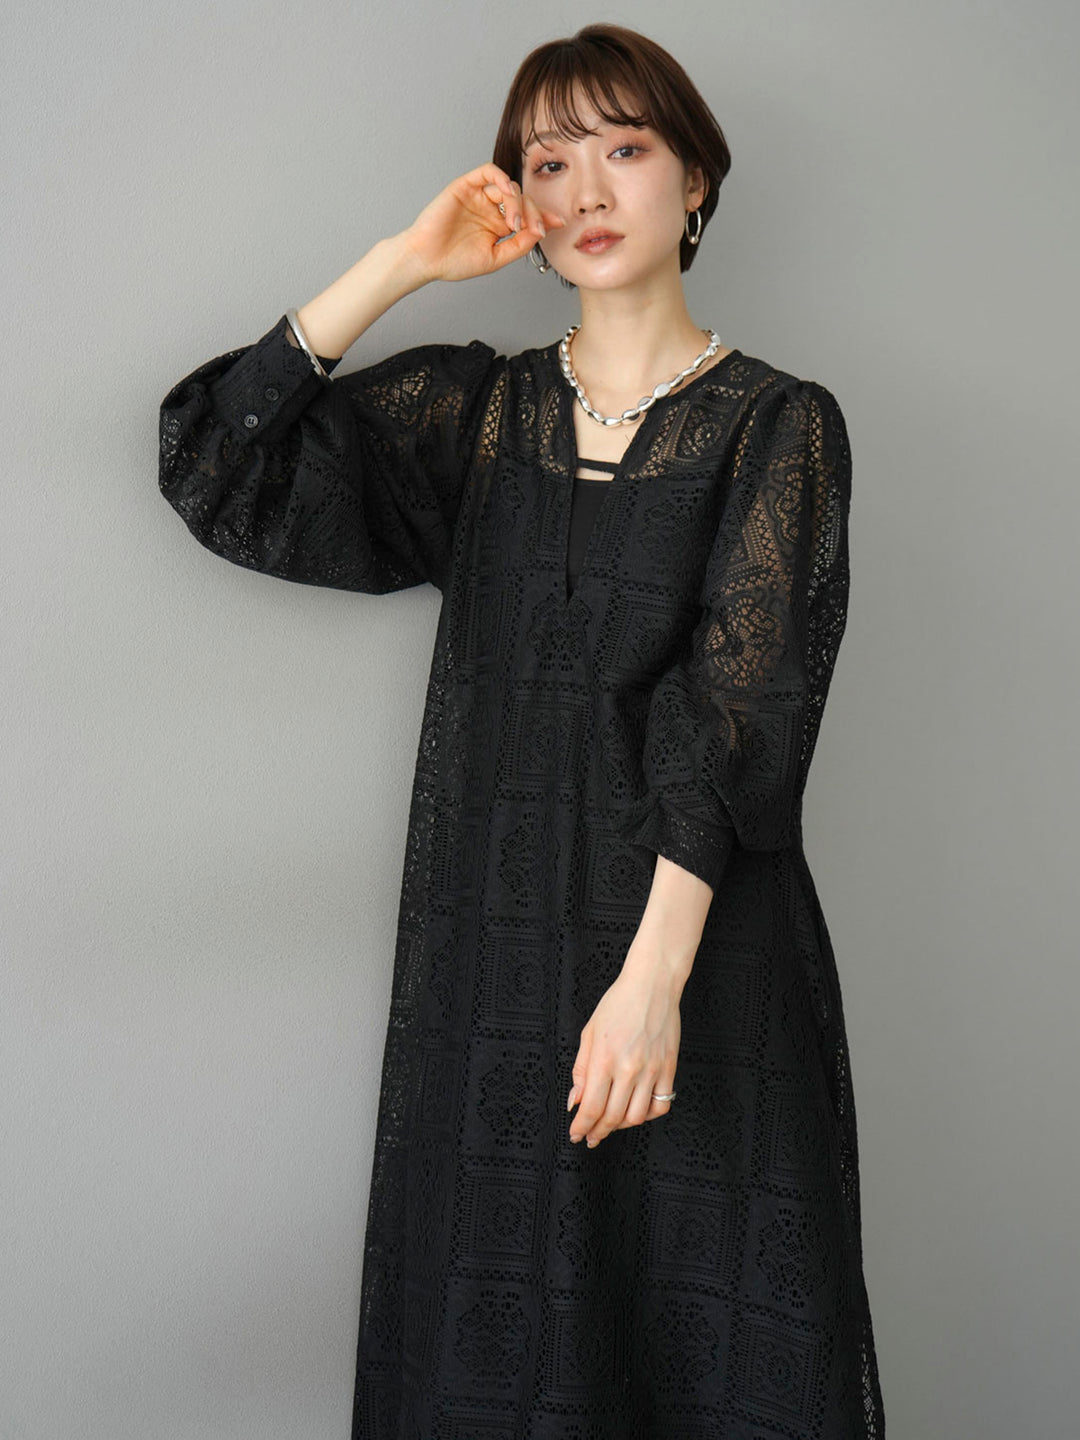 [SET] Block lace volume sleeve dress + selectable necklace set (2 sets)